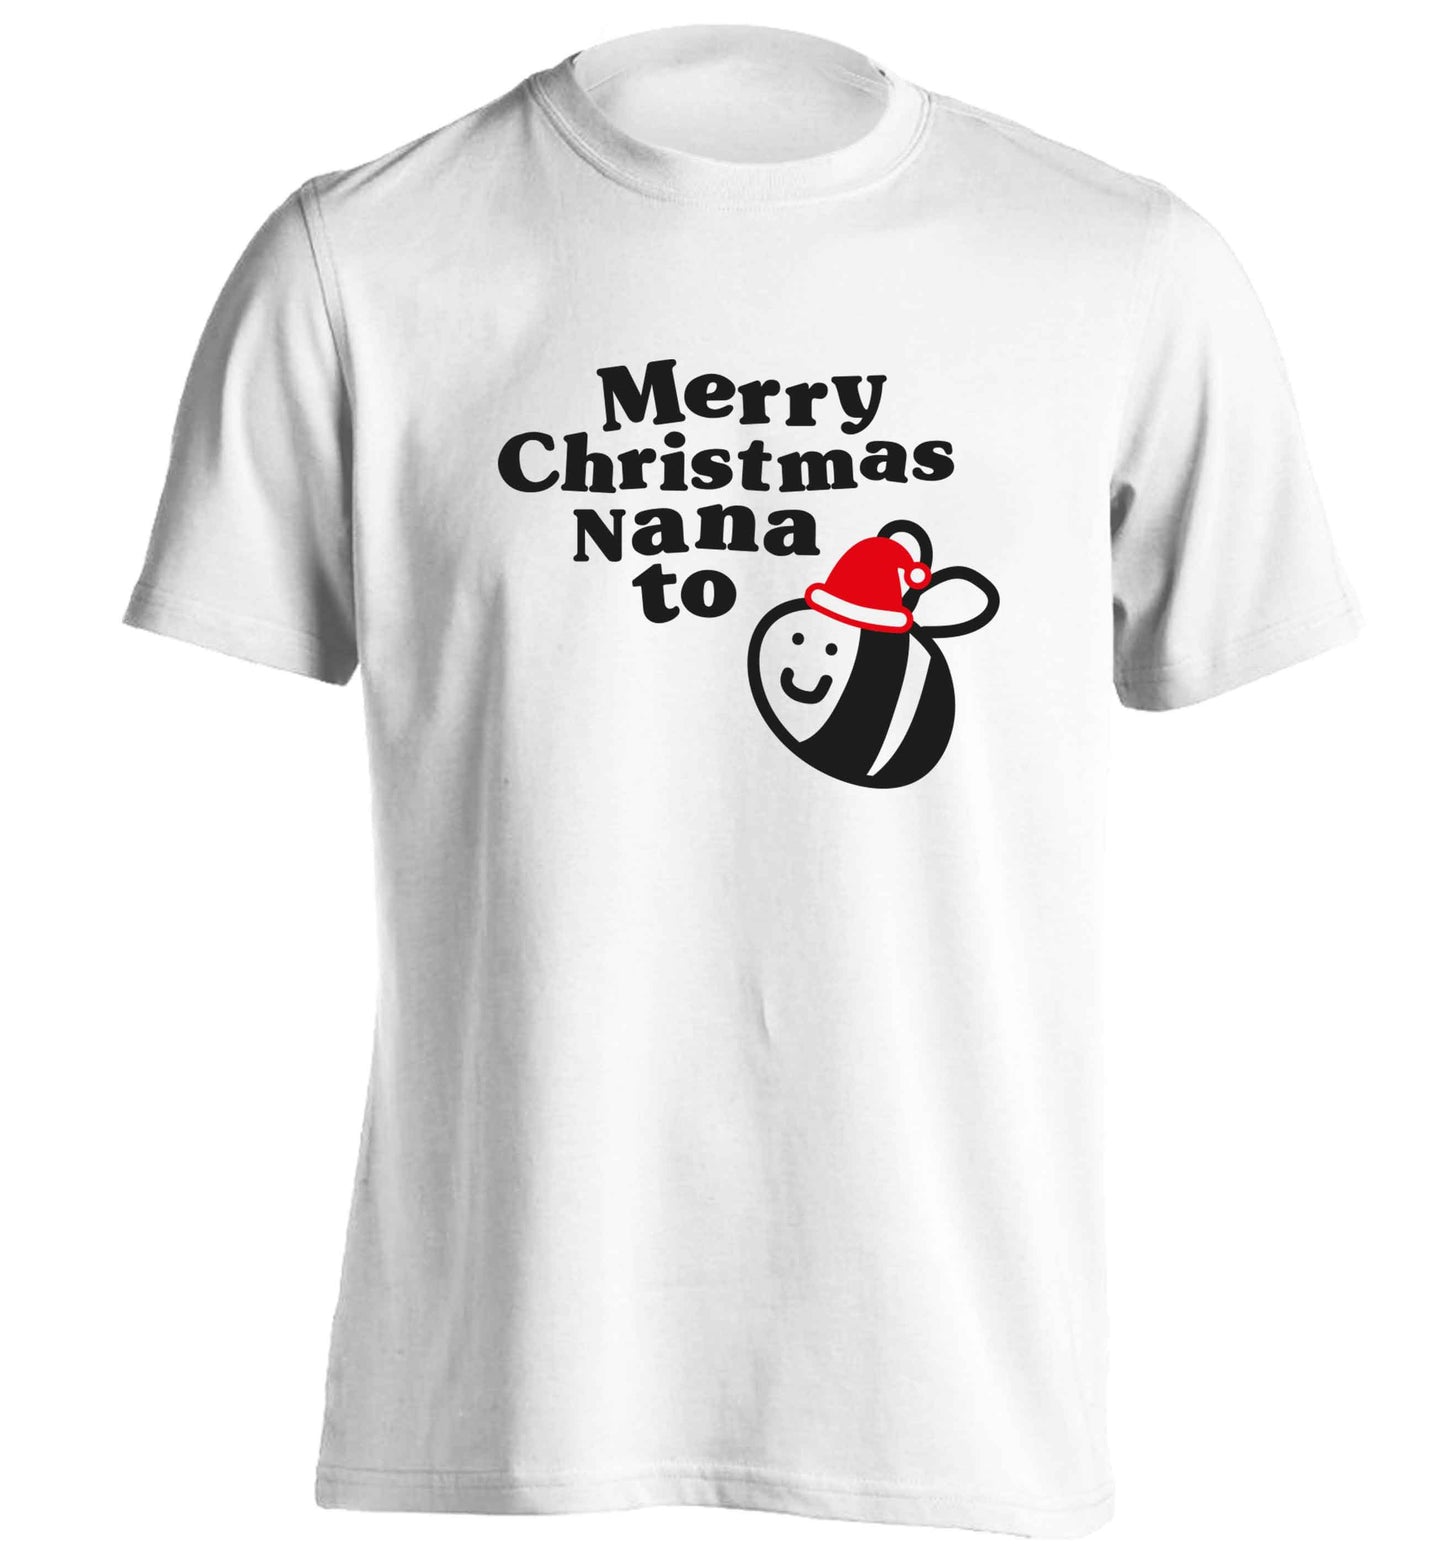 Merry Christmas nana to be adults unisex white Tshirt 2XL